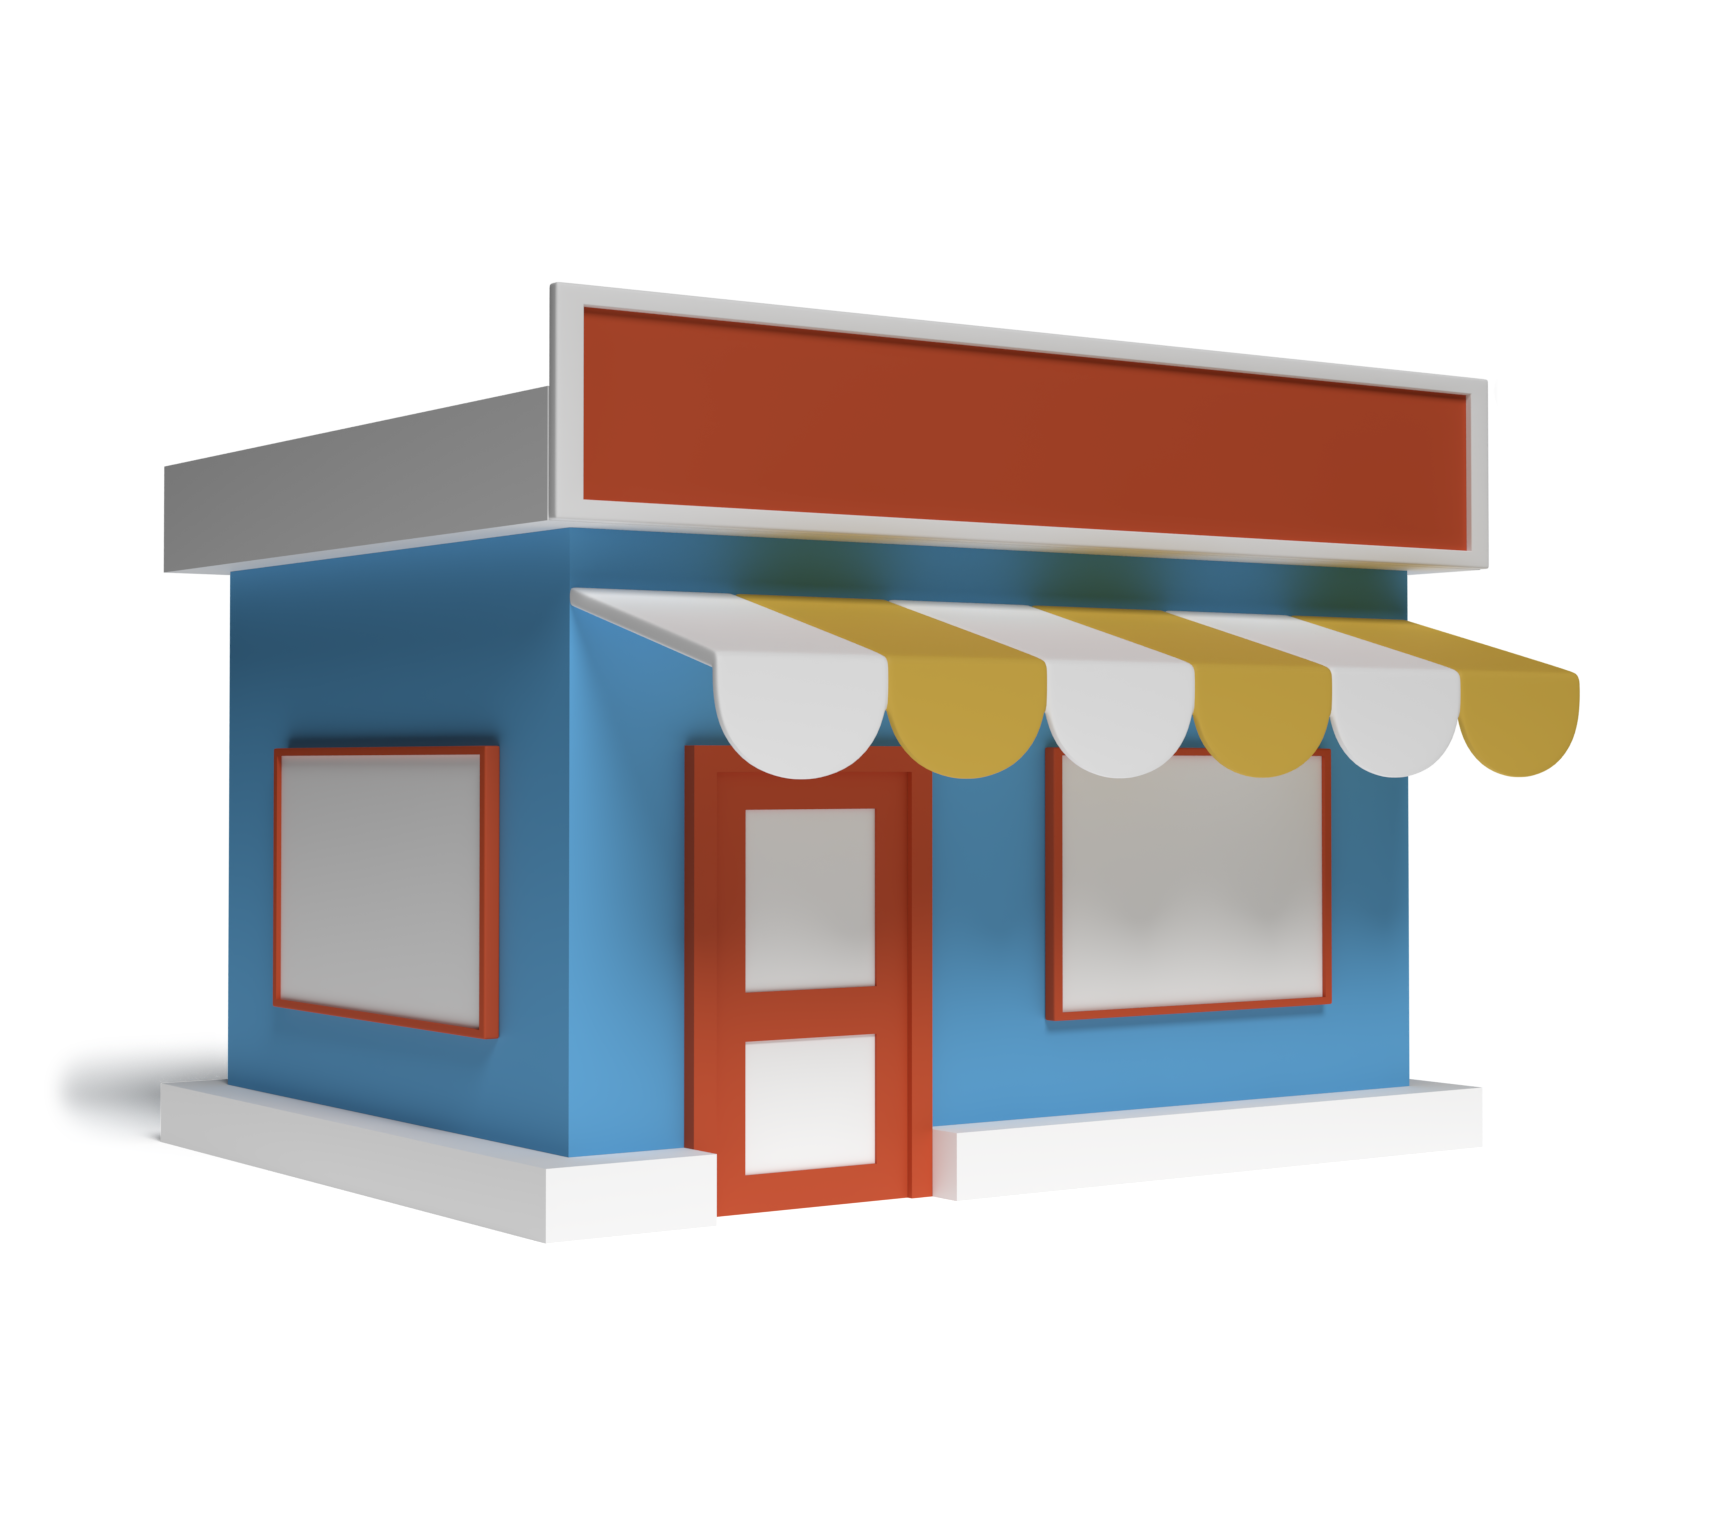 3D rendering of storefront